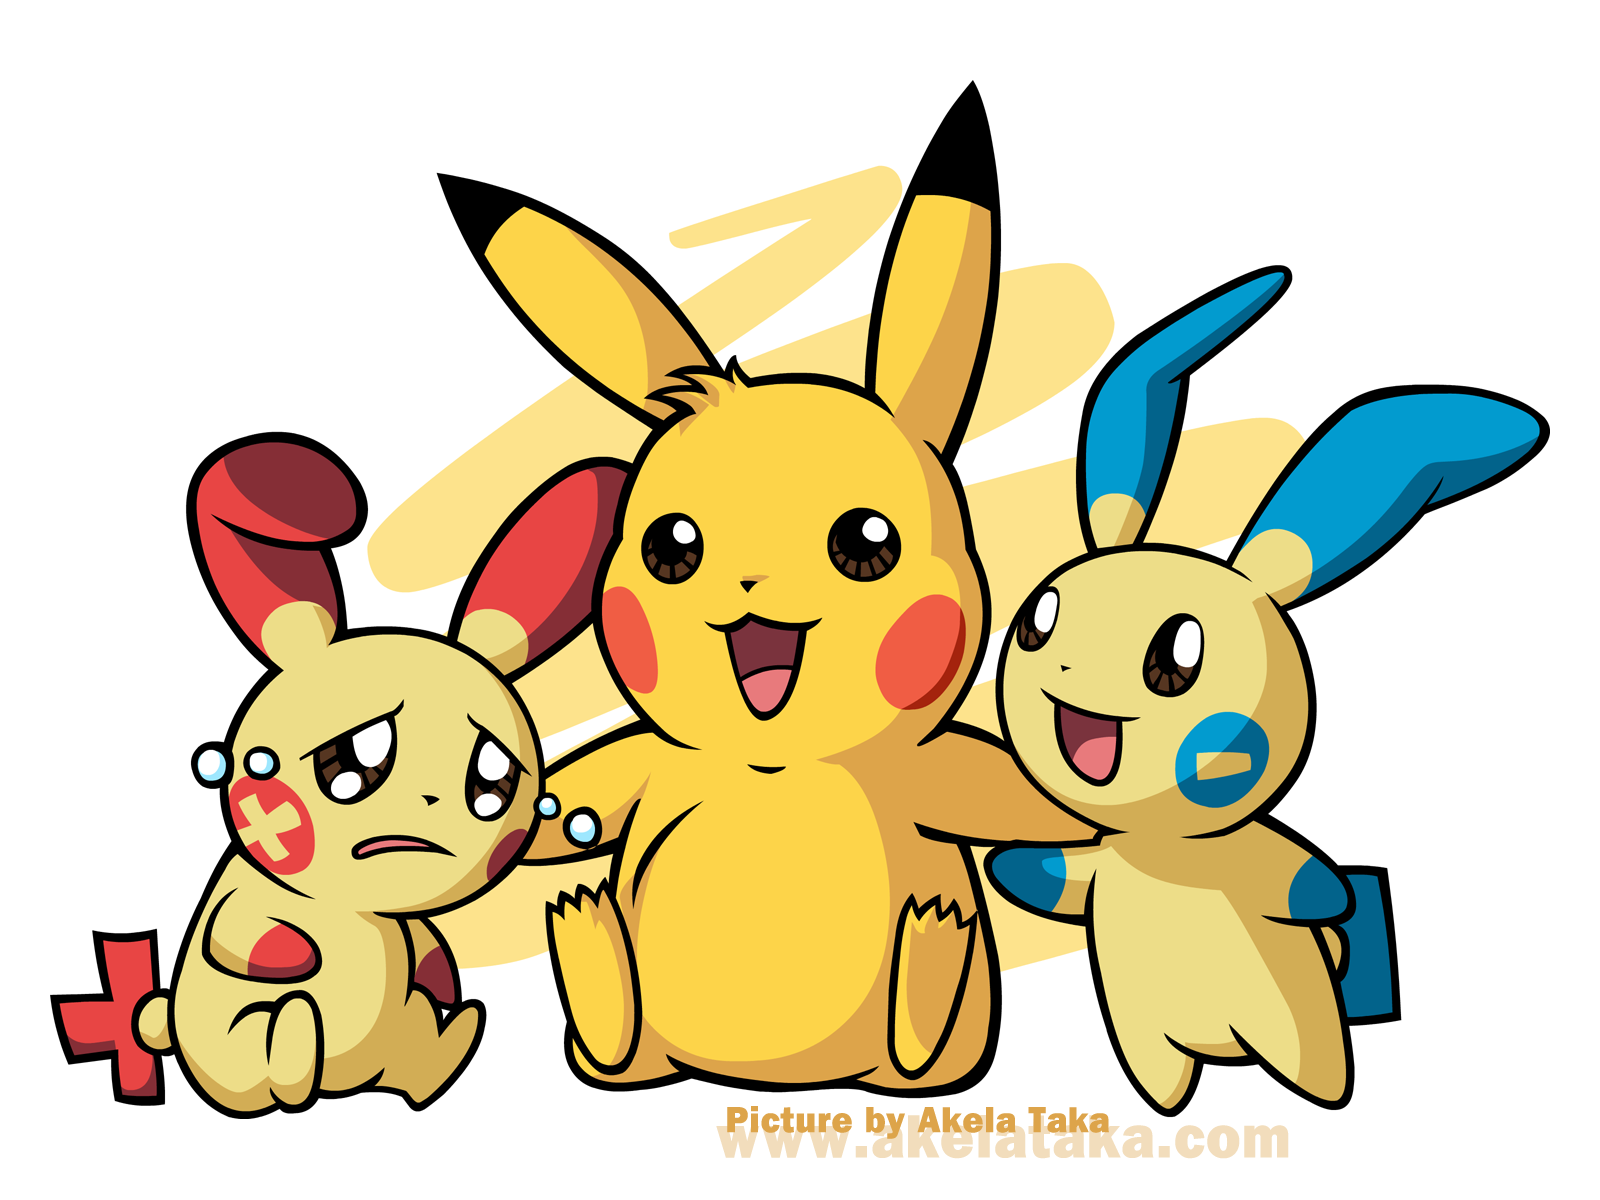 Pikachu, Plusle and Minun